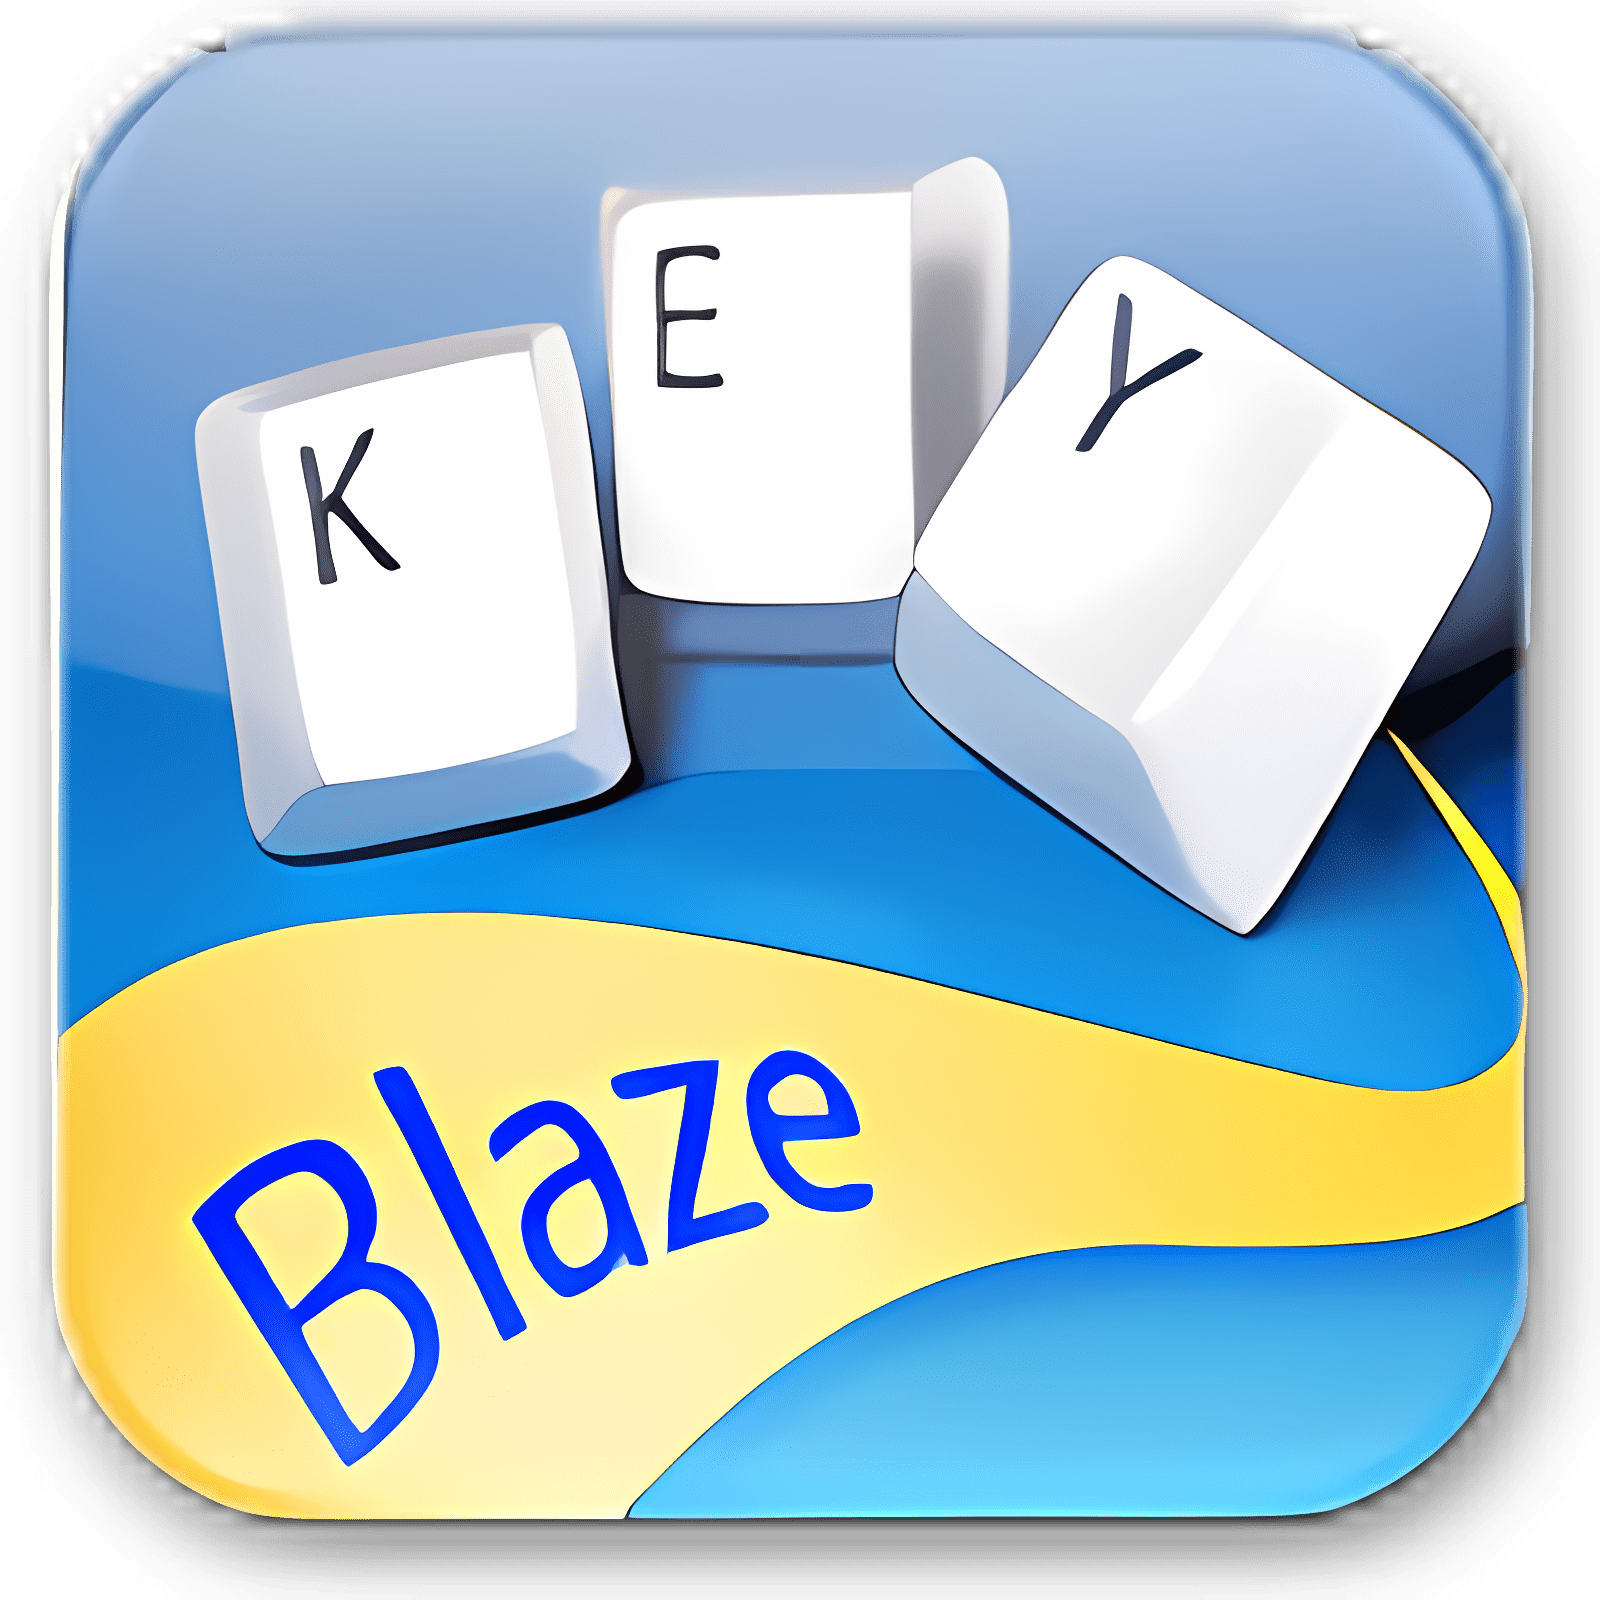 keyblaze typing tutor download